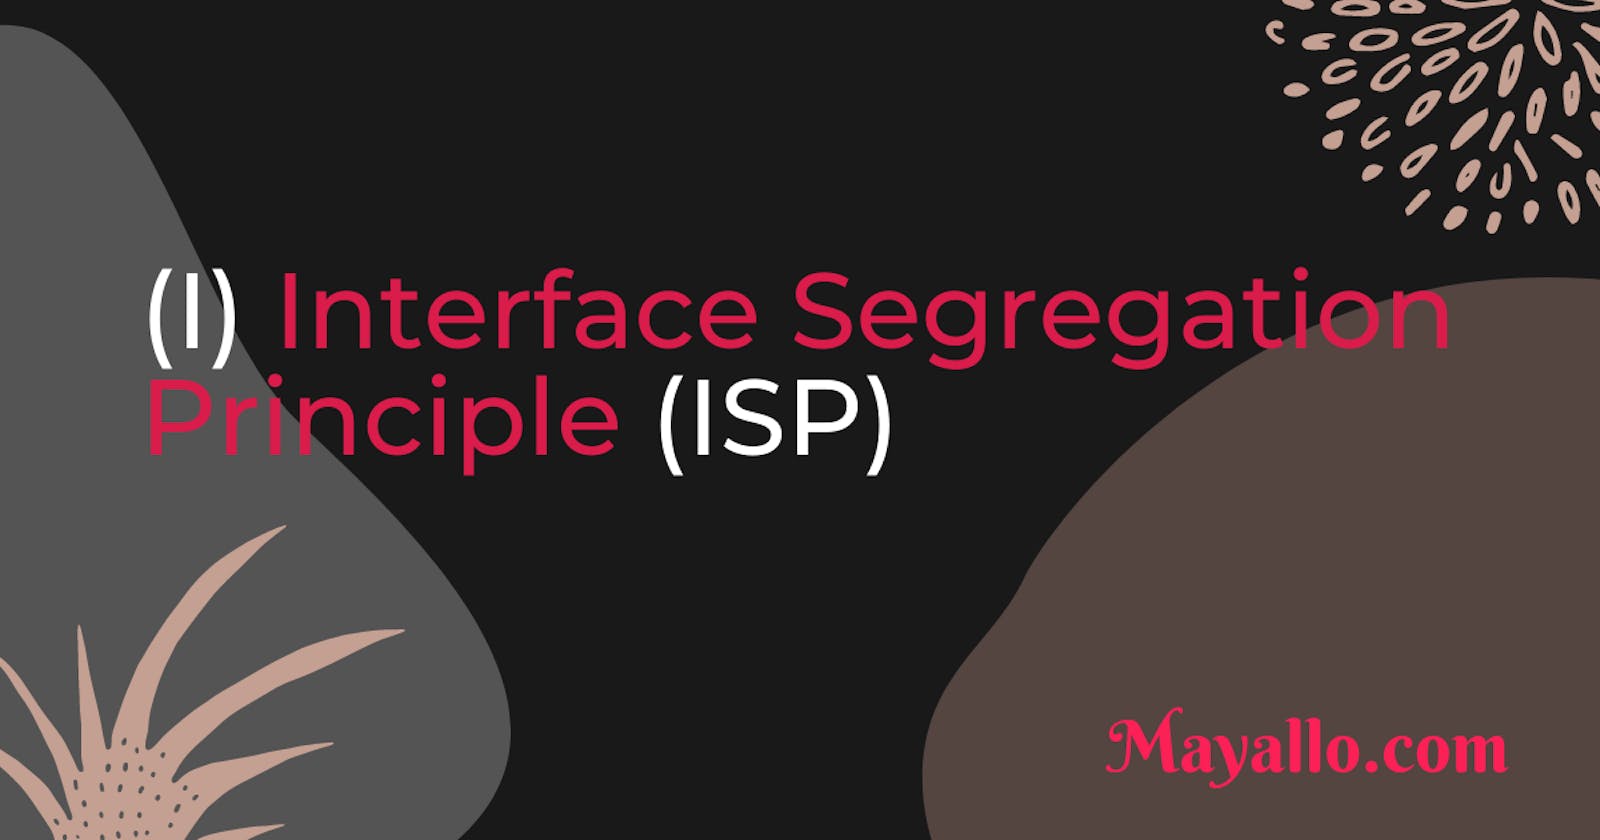 Is Interface Segregation Principle Redundant?